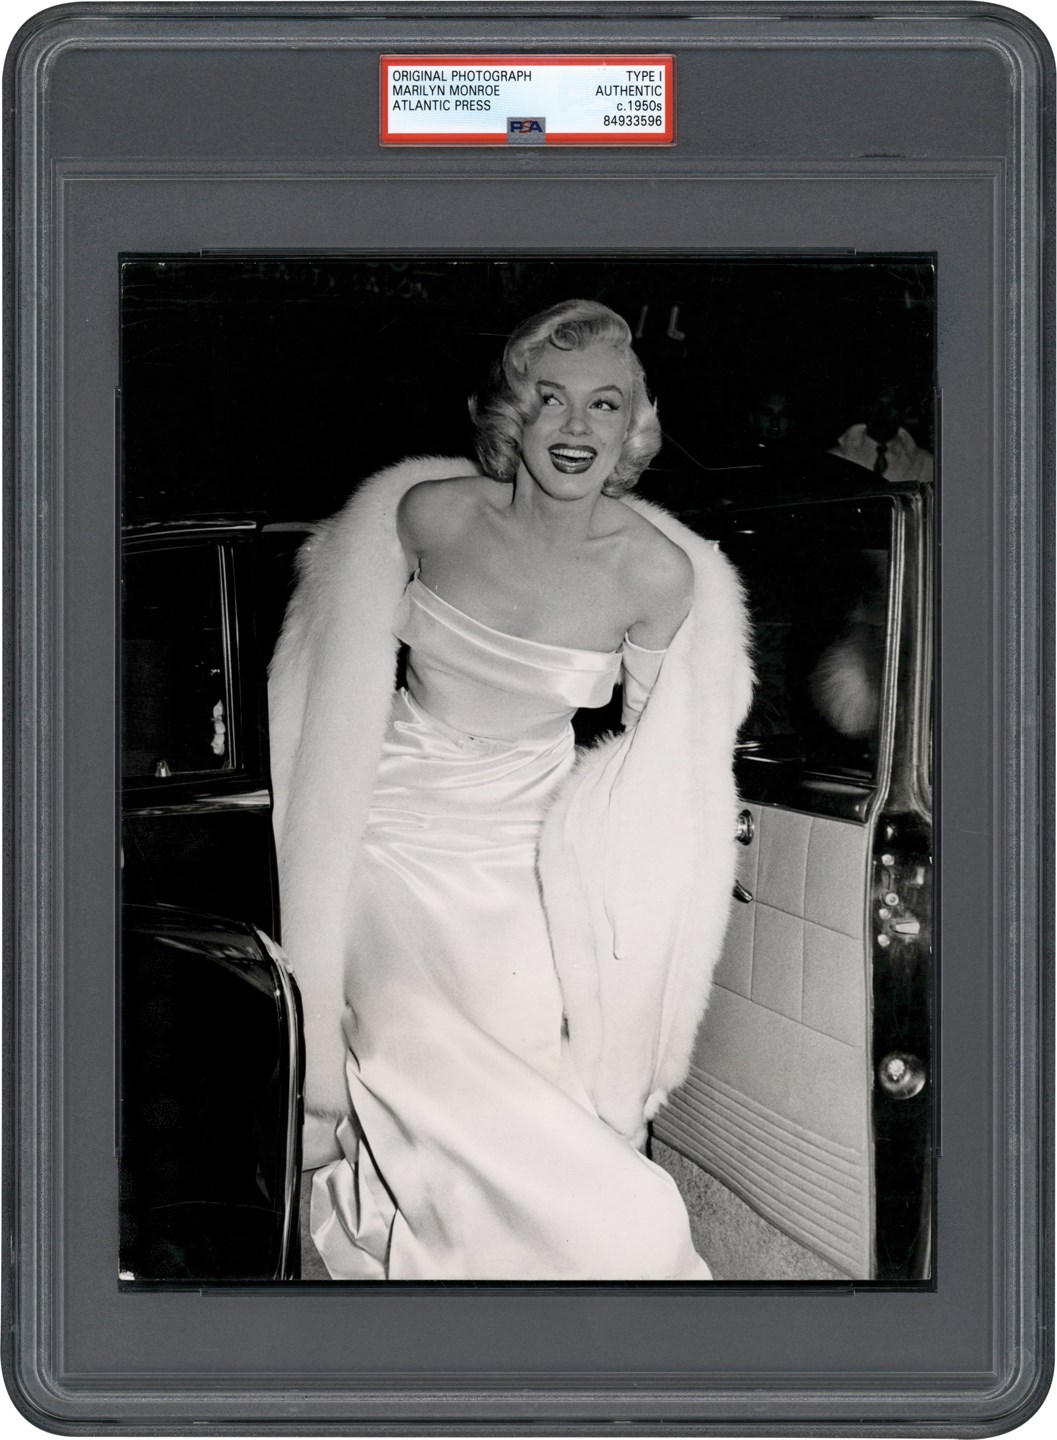 - Circa 1950s Marilyn Monroe Atlantic Press Original Photograph (PSA Type I)